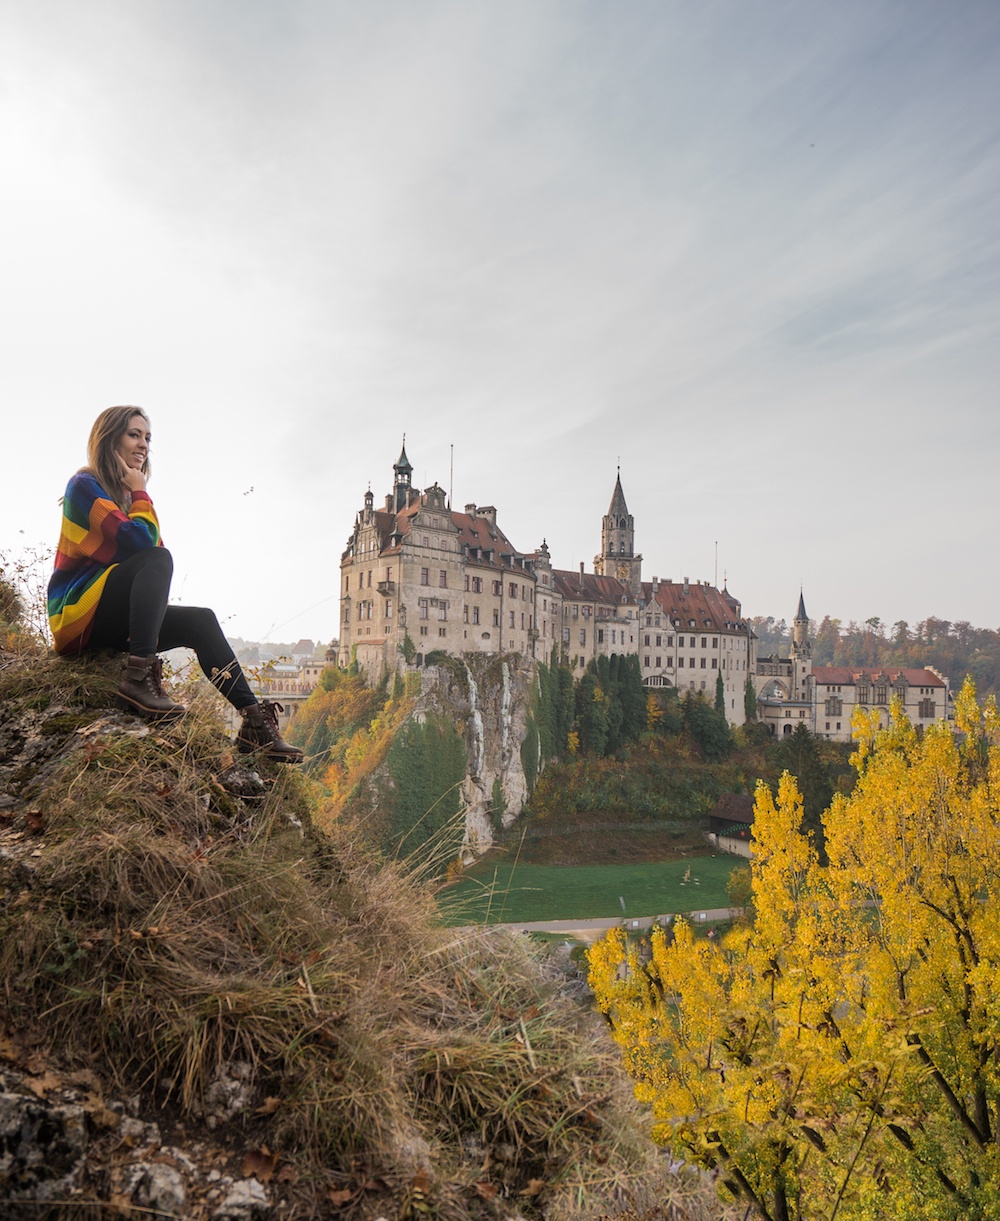 Hohenzollern-Sigmaringen autumn in Germany